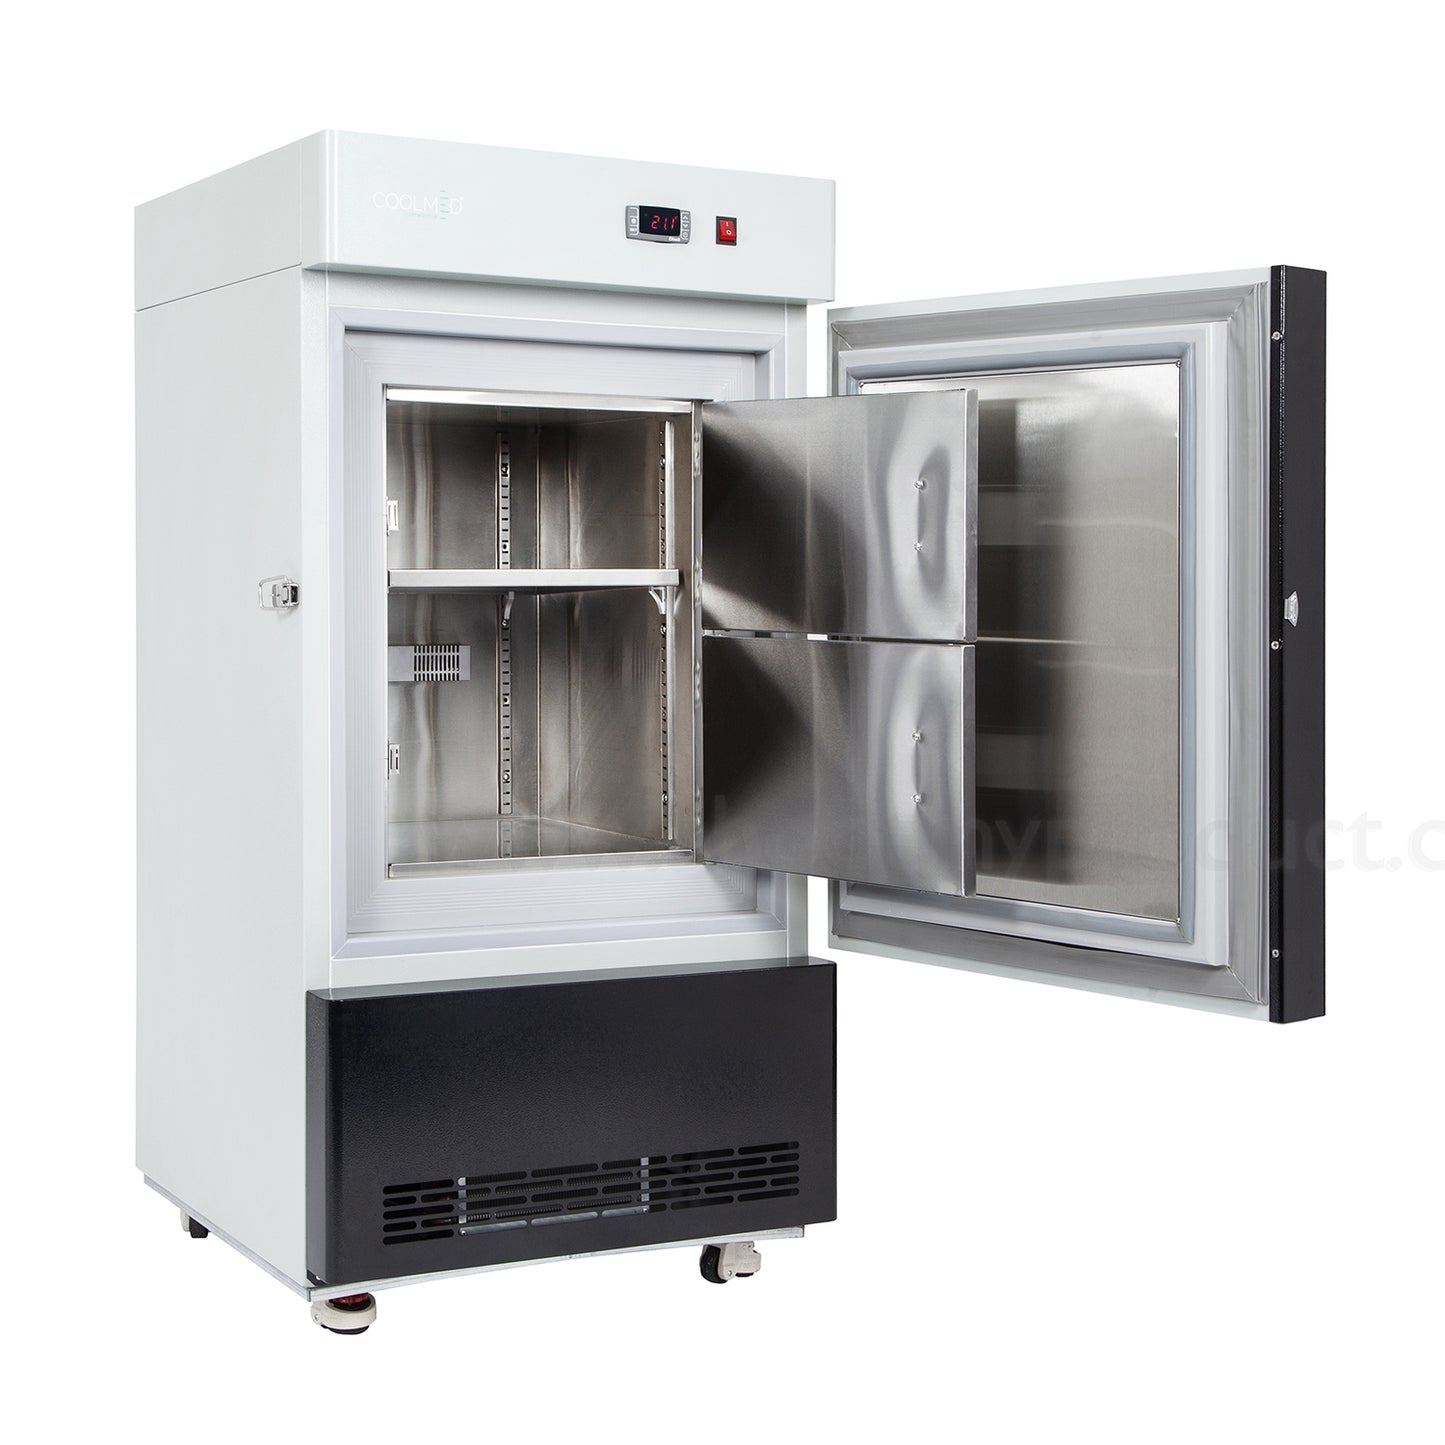 CoolMed -86°C Ultra Low Temperature Freezer - 80 Litres - CMF86V80